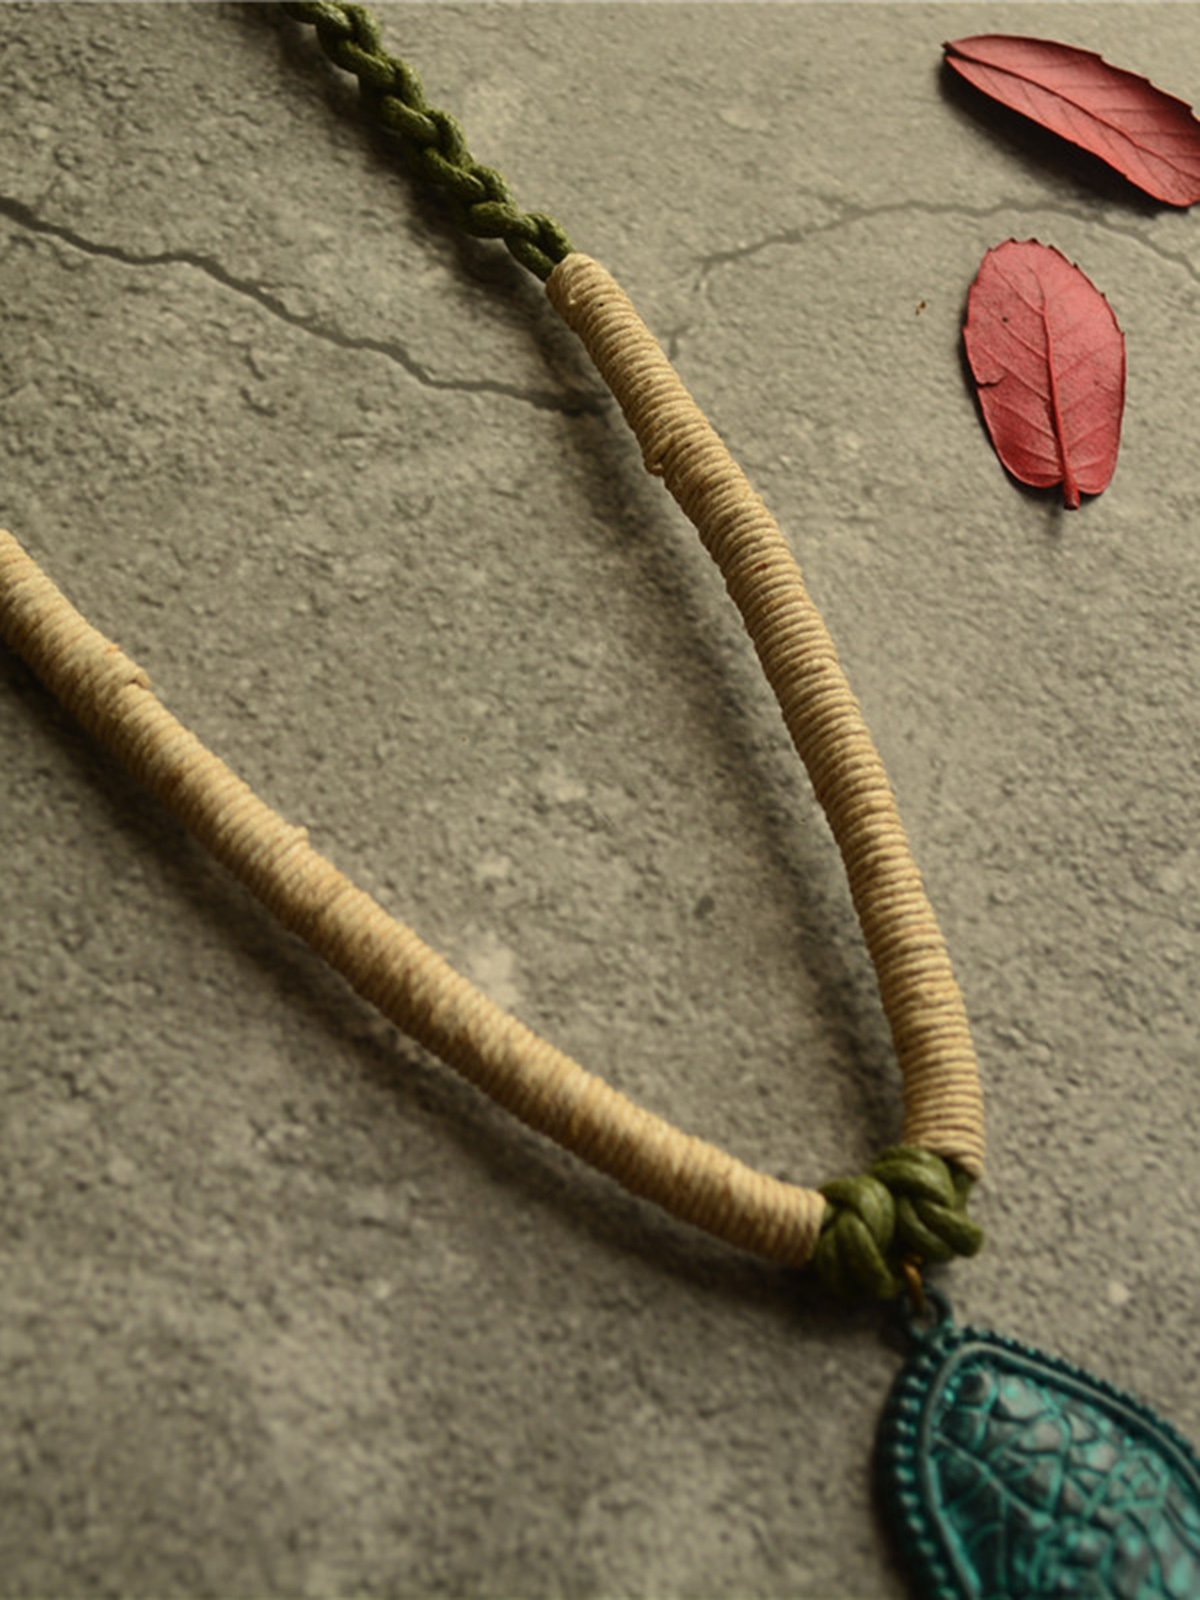 Vintage Cotton Rope Braided Copper Pendant Necklace